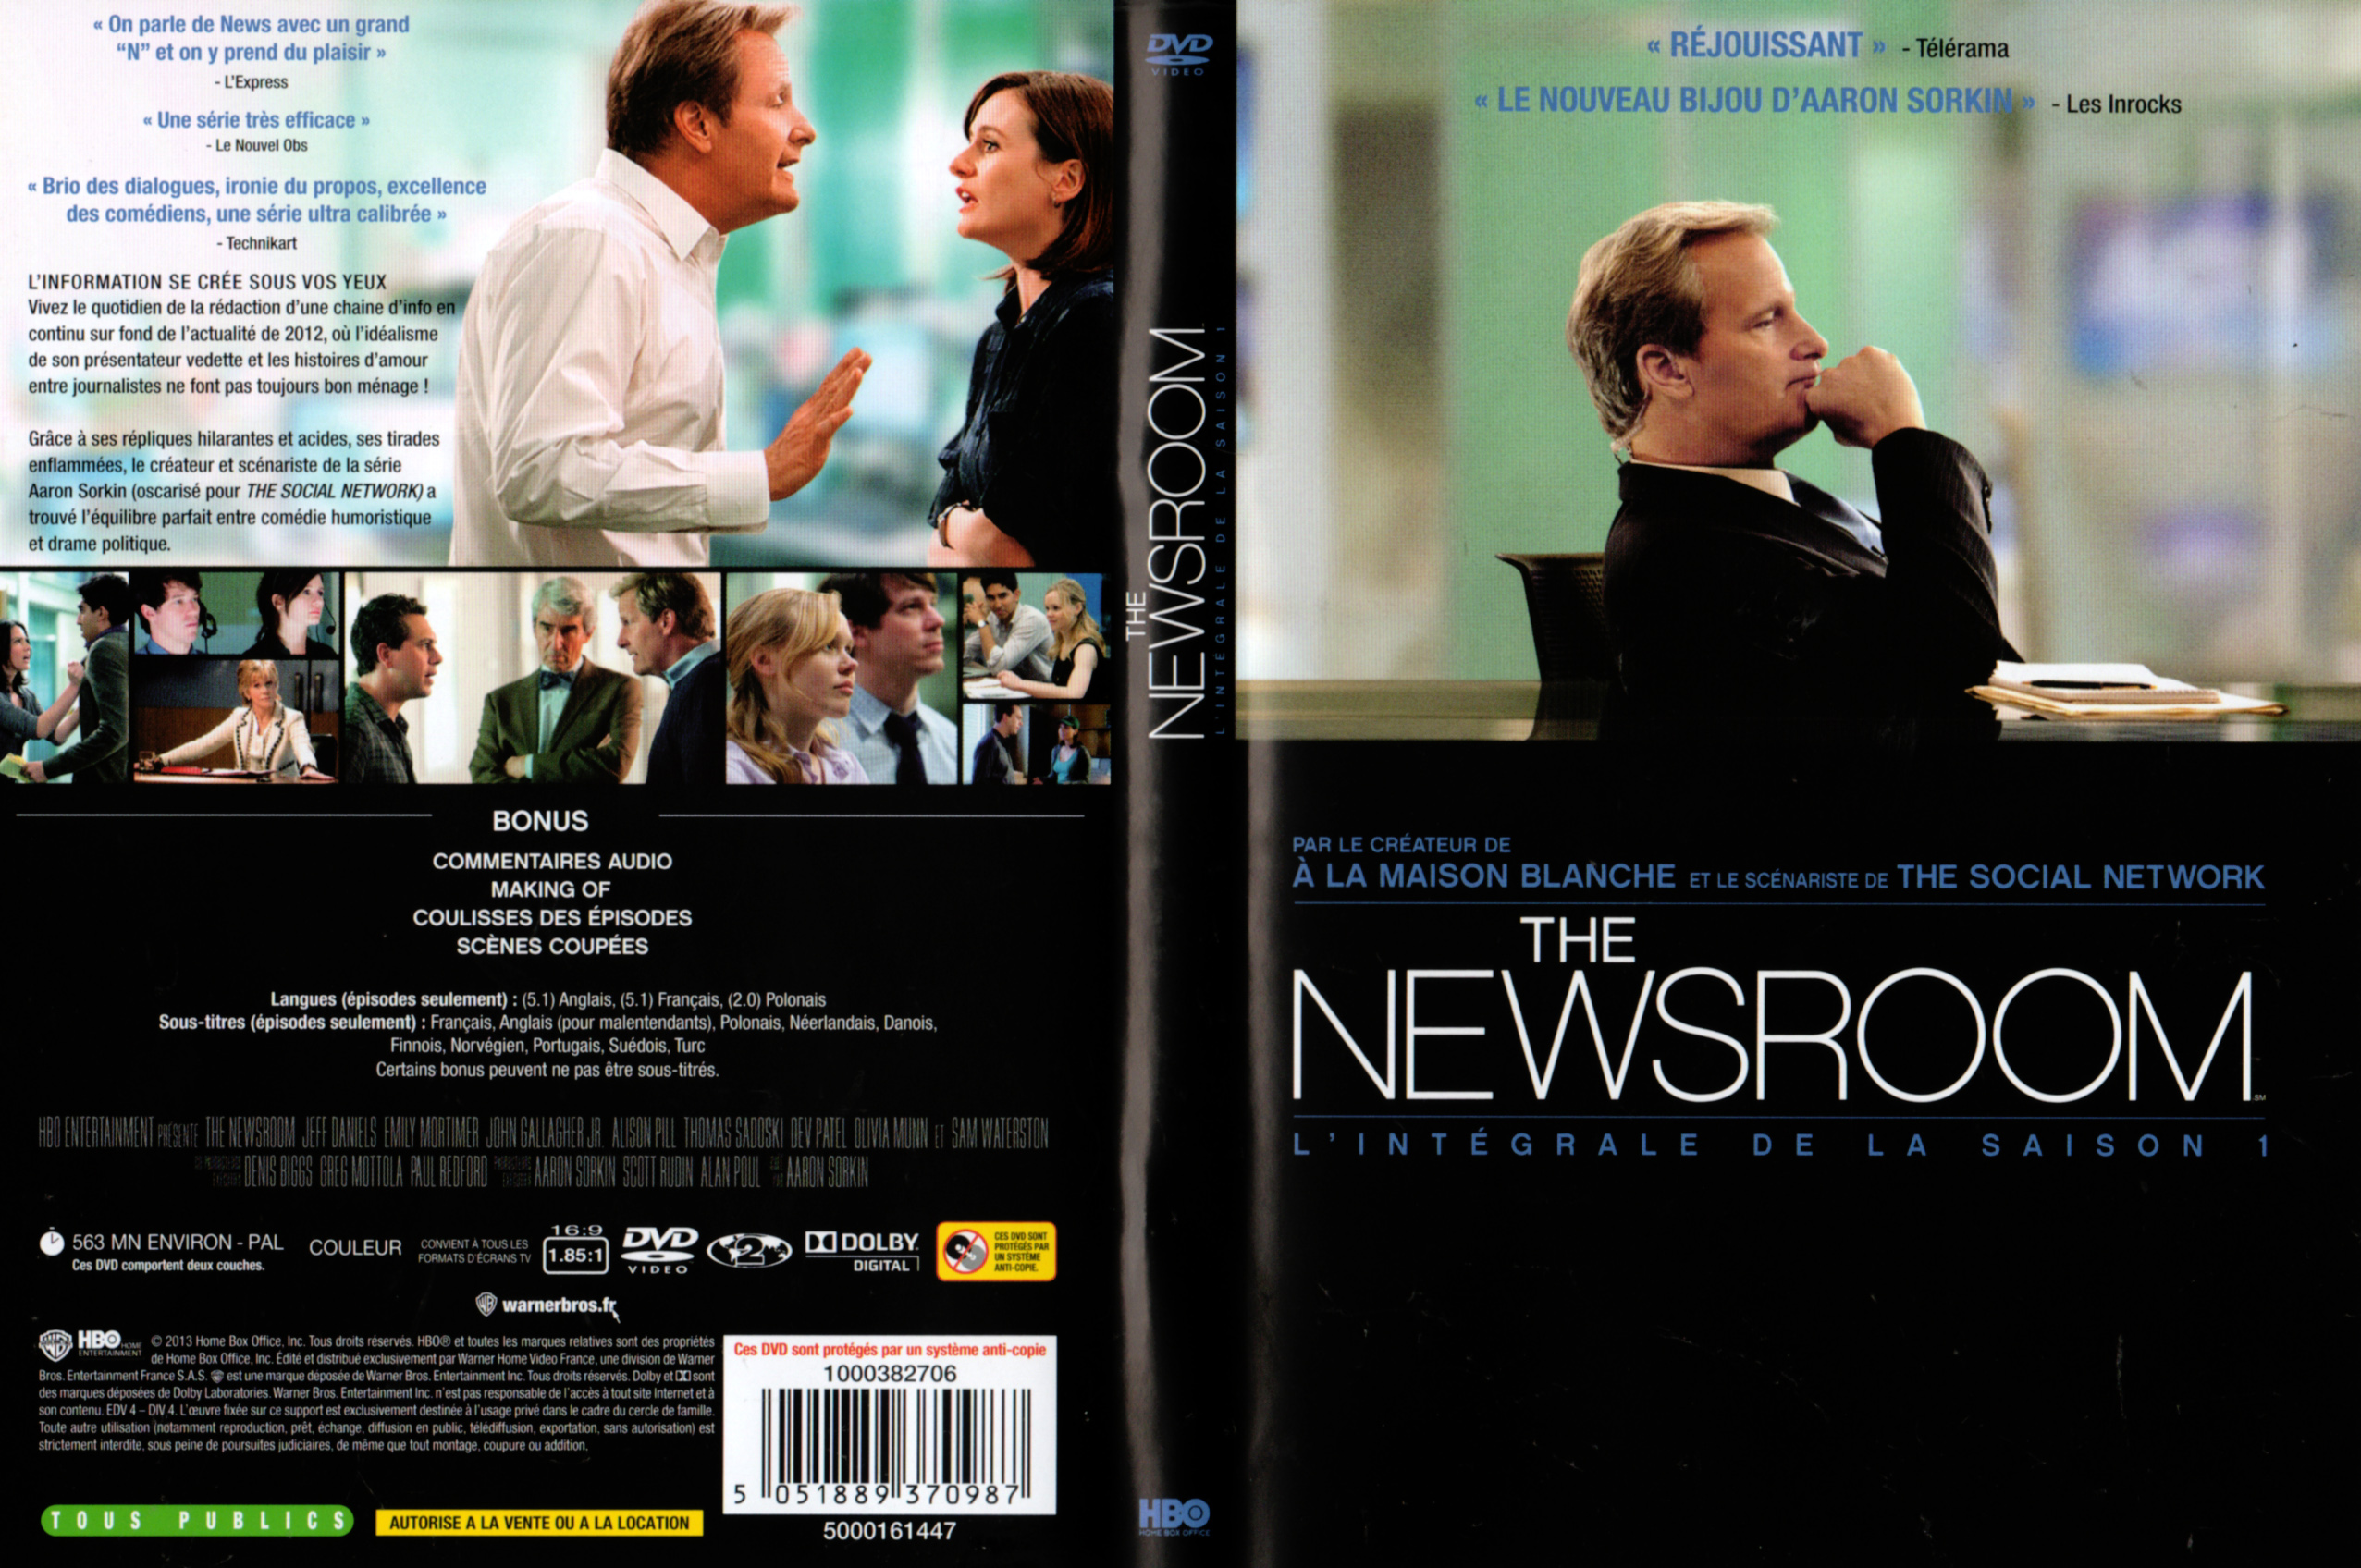 Jaquette DVD The newsroom Saison 1